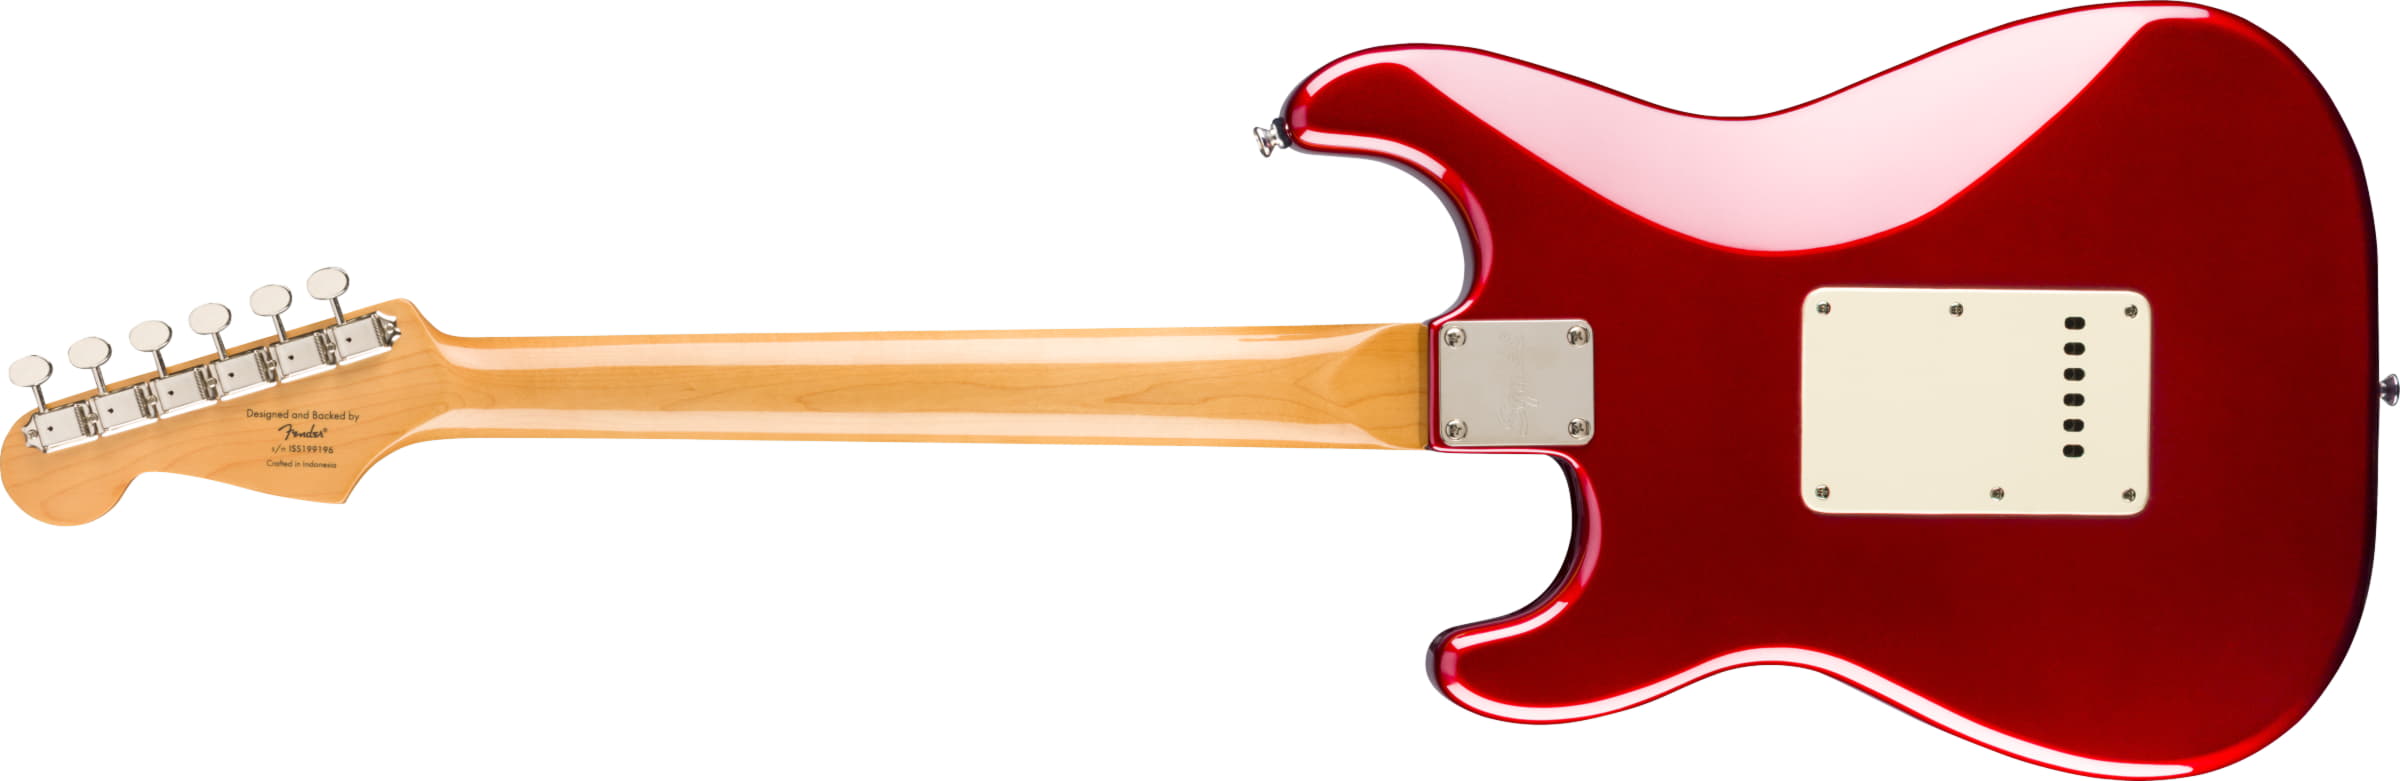 Squier mm stratocaster. Электрогитара Fender Stratocaster. Гитара Fender Squier Stratocaster. Электрогитара Squier FSR Bullet Stratocaster HT HSS 2-Color Sunburst. Электрогитара Fender Duo-Sonic.